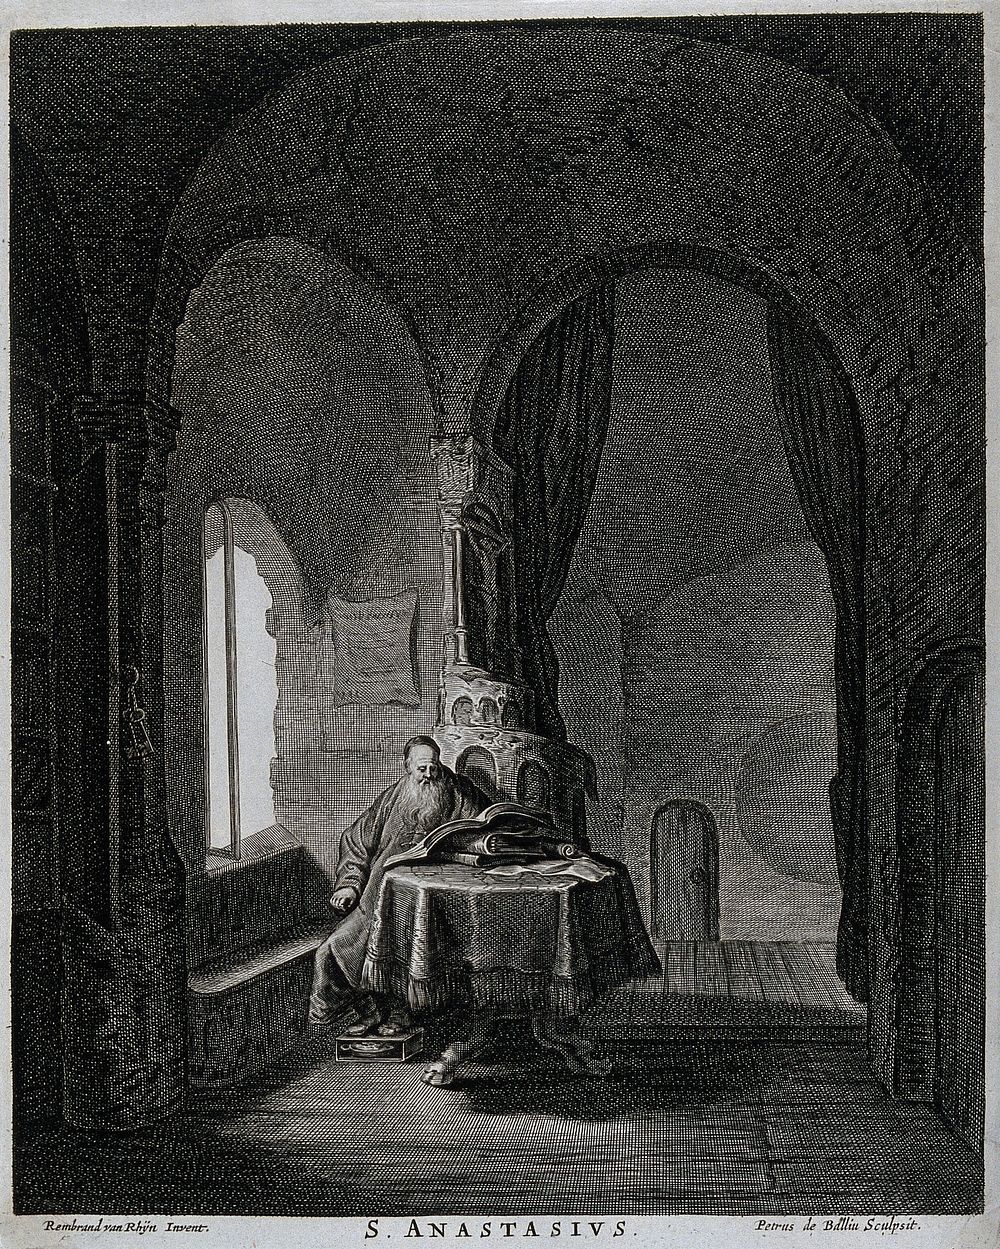 An old man reading a book, designated as Saint Anastasius. Engraving by P. de Balliu after Rembrandt van Rijn.